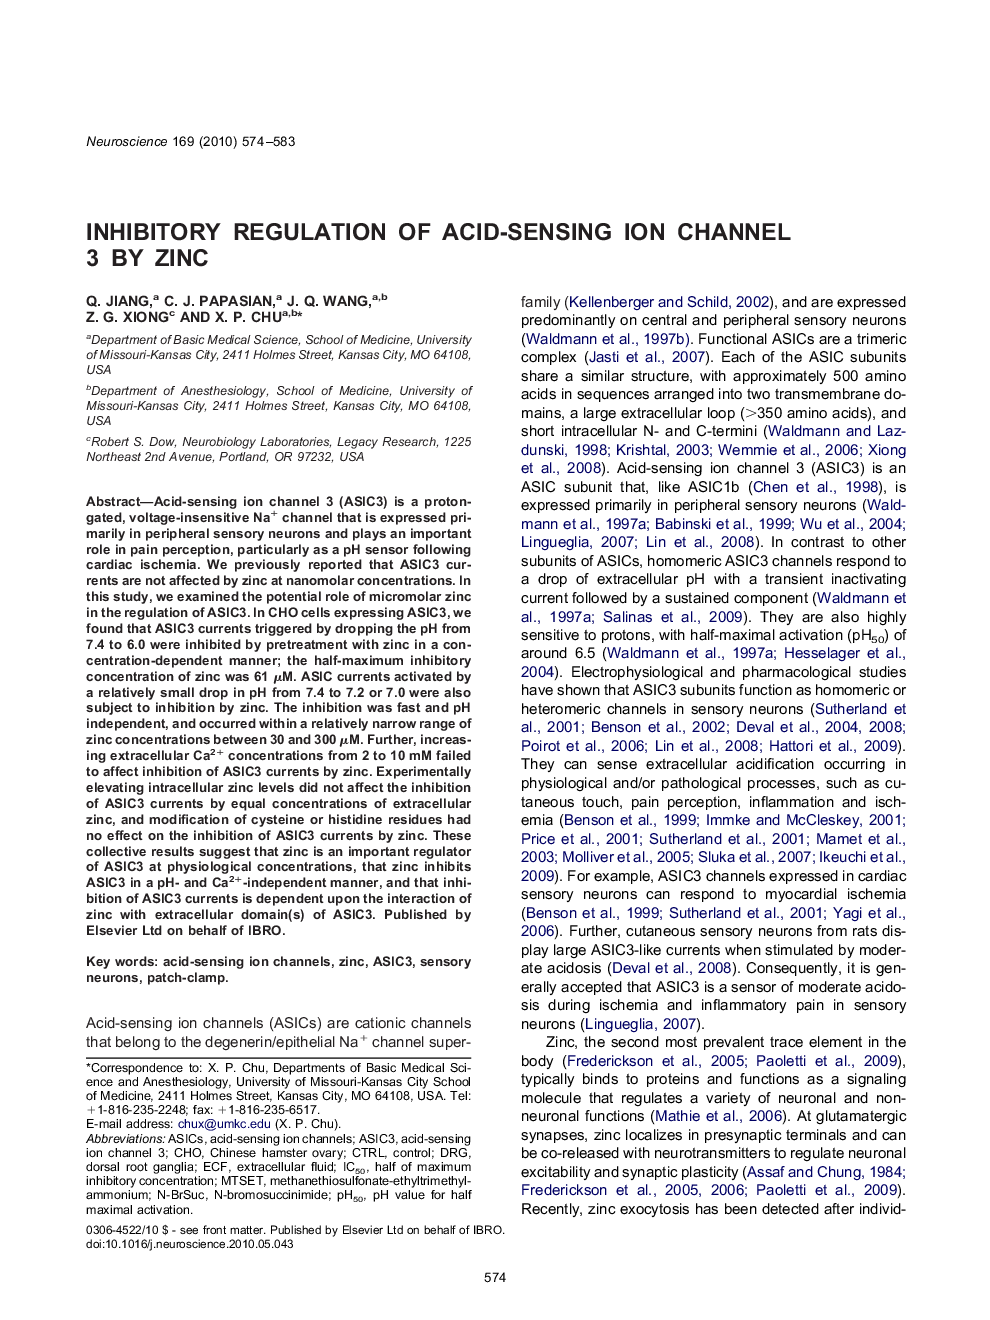 Inhibitory regulation of acid-sensing ion channel 3 by zinc